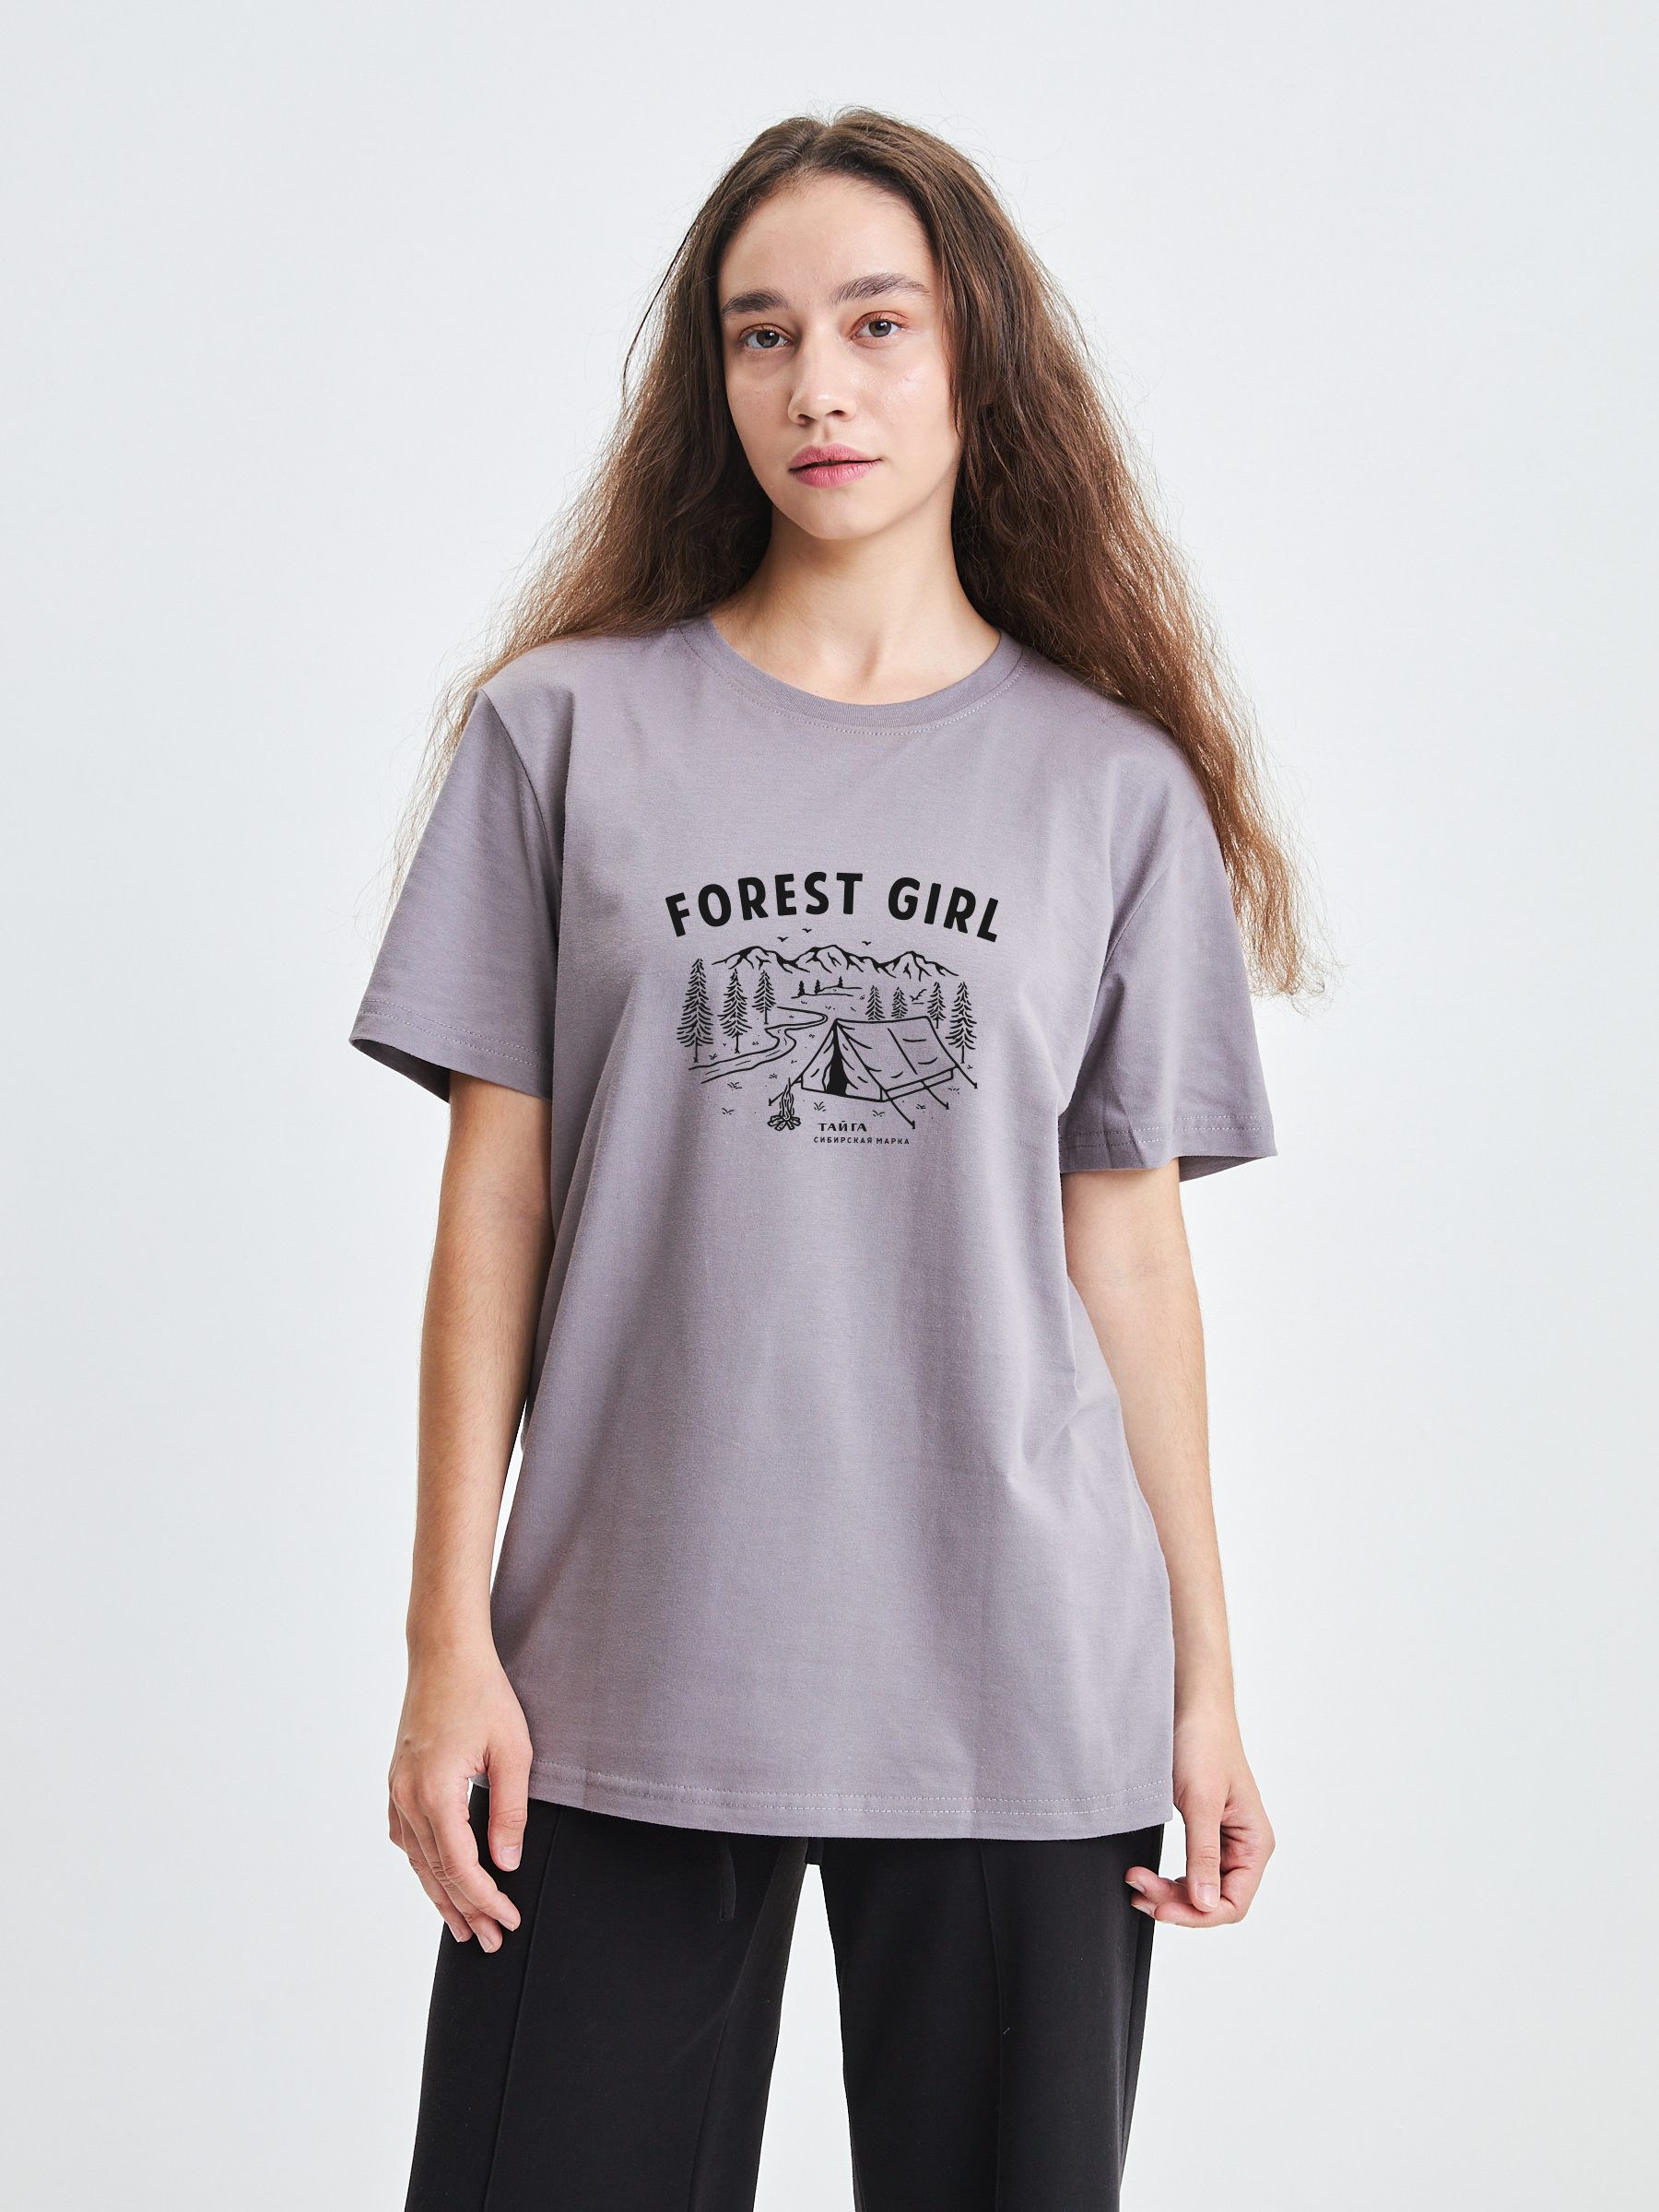 Футболка Тайга Эхо унисекс: Forest girl (серый)